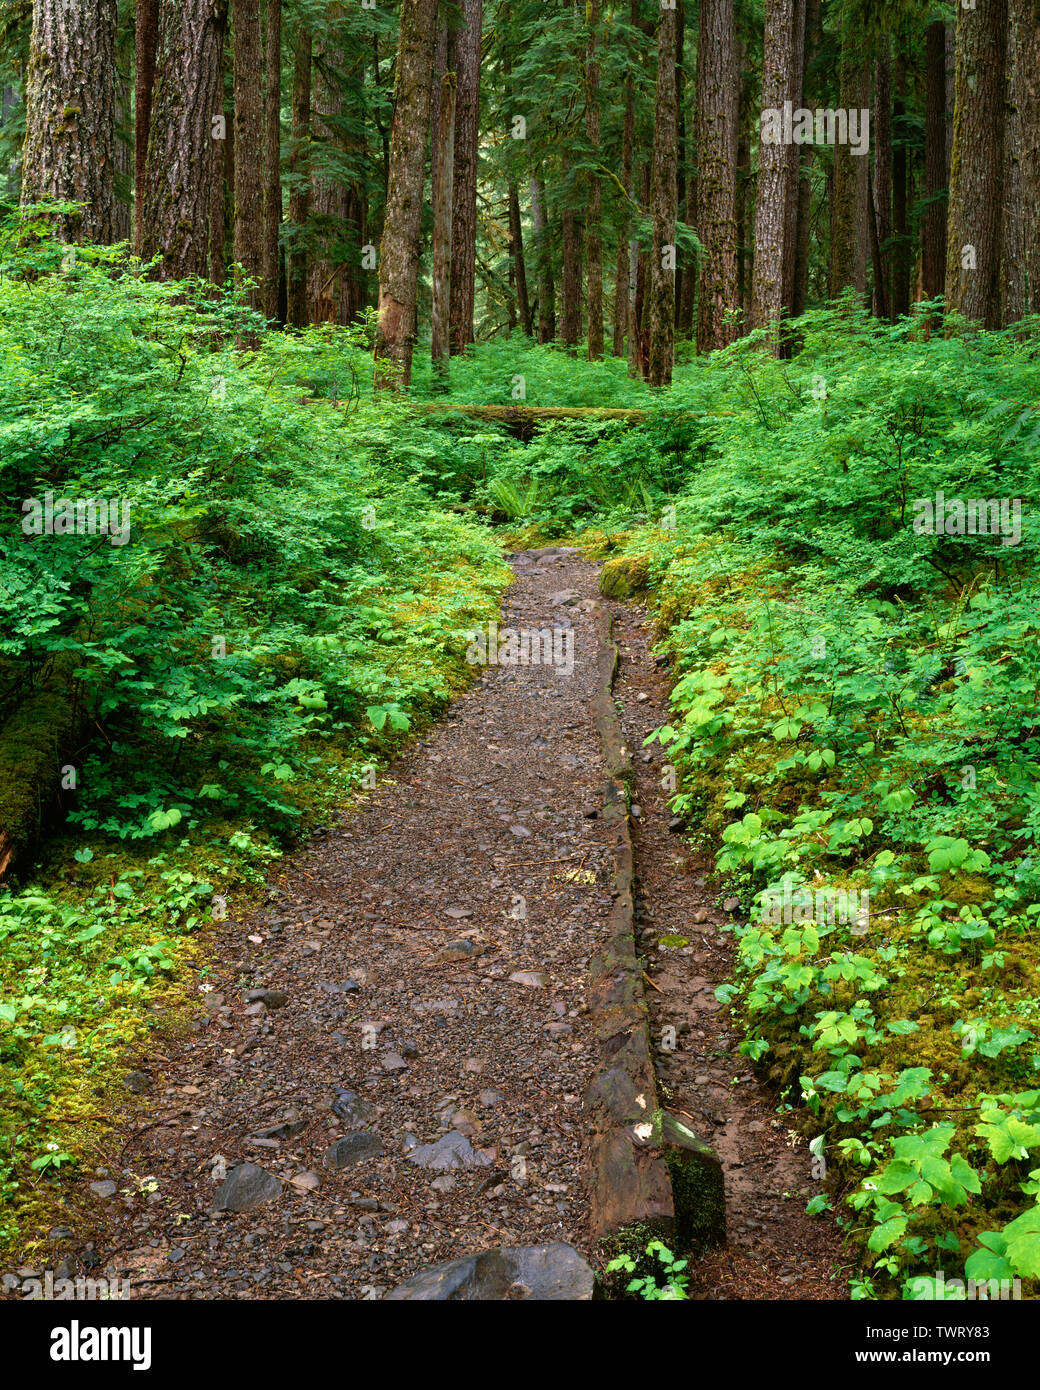 USA, Washington, Olympic National Park, Trail through old growth forest of western hemlock (Tsuga heterophylla) with lush, dense understory. Stock Photo